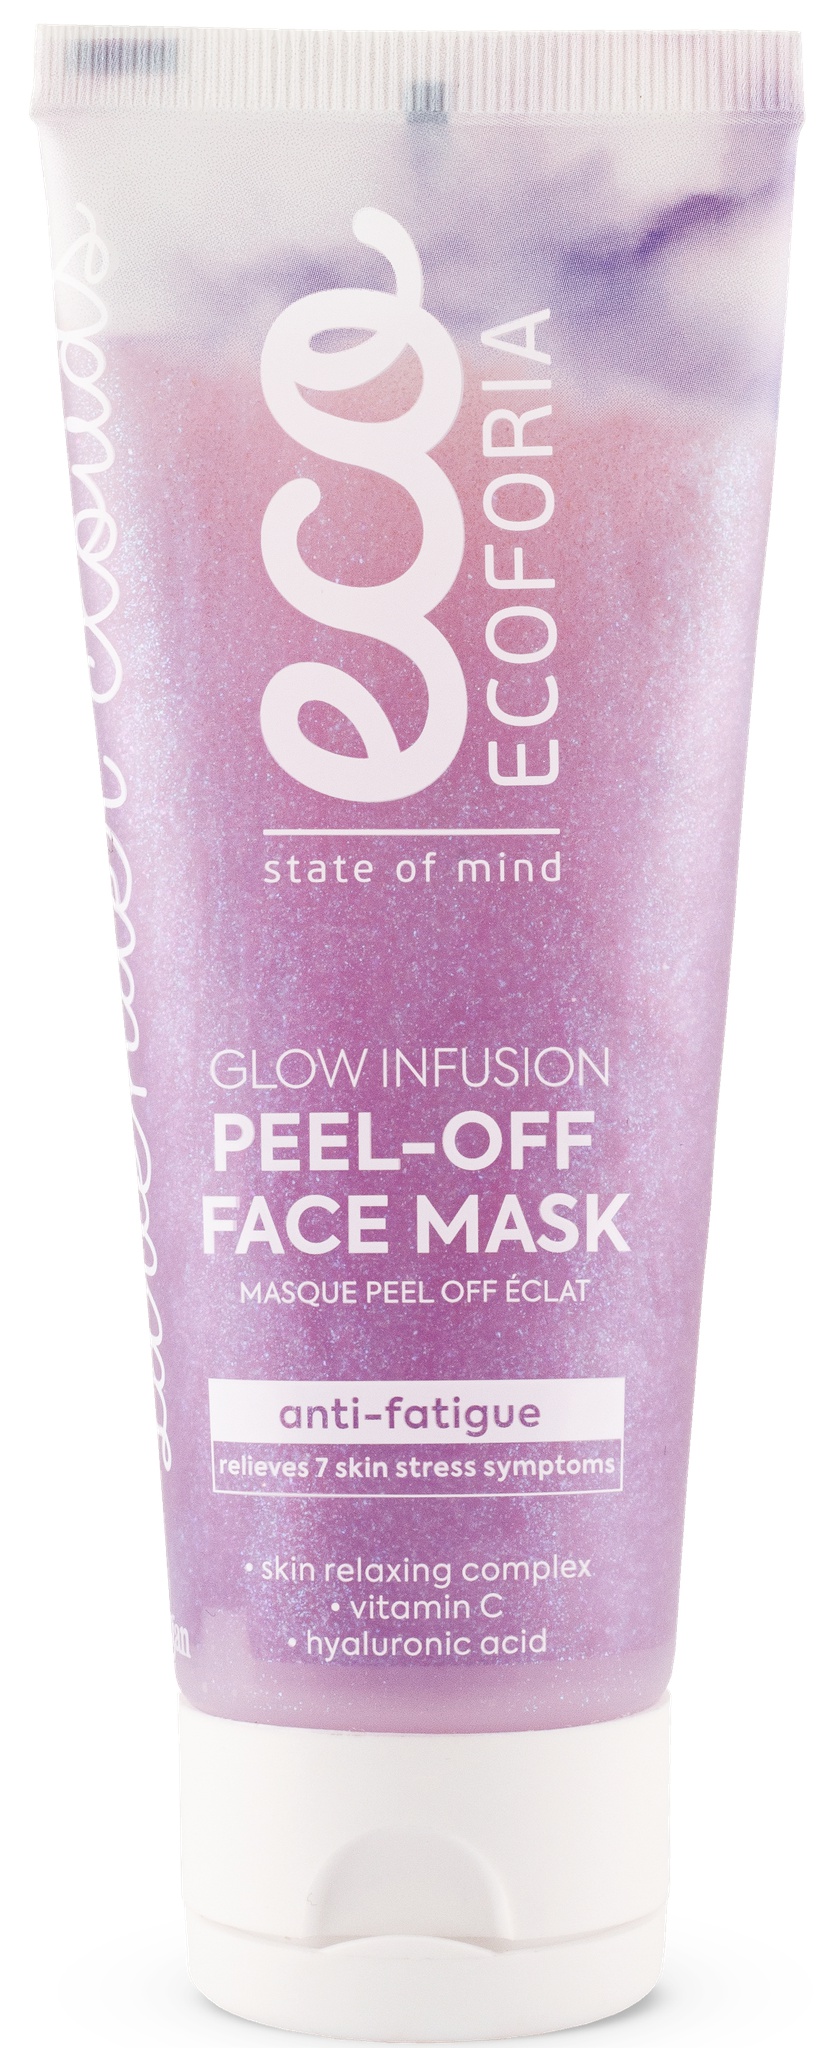 Ecoforia Glow Infusion Peel-Off Face Mask